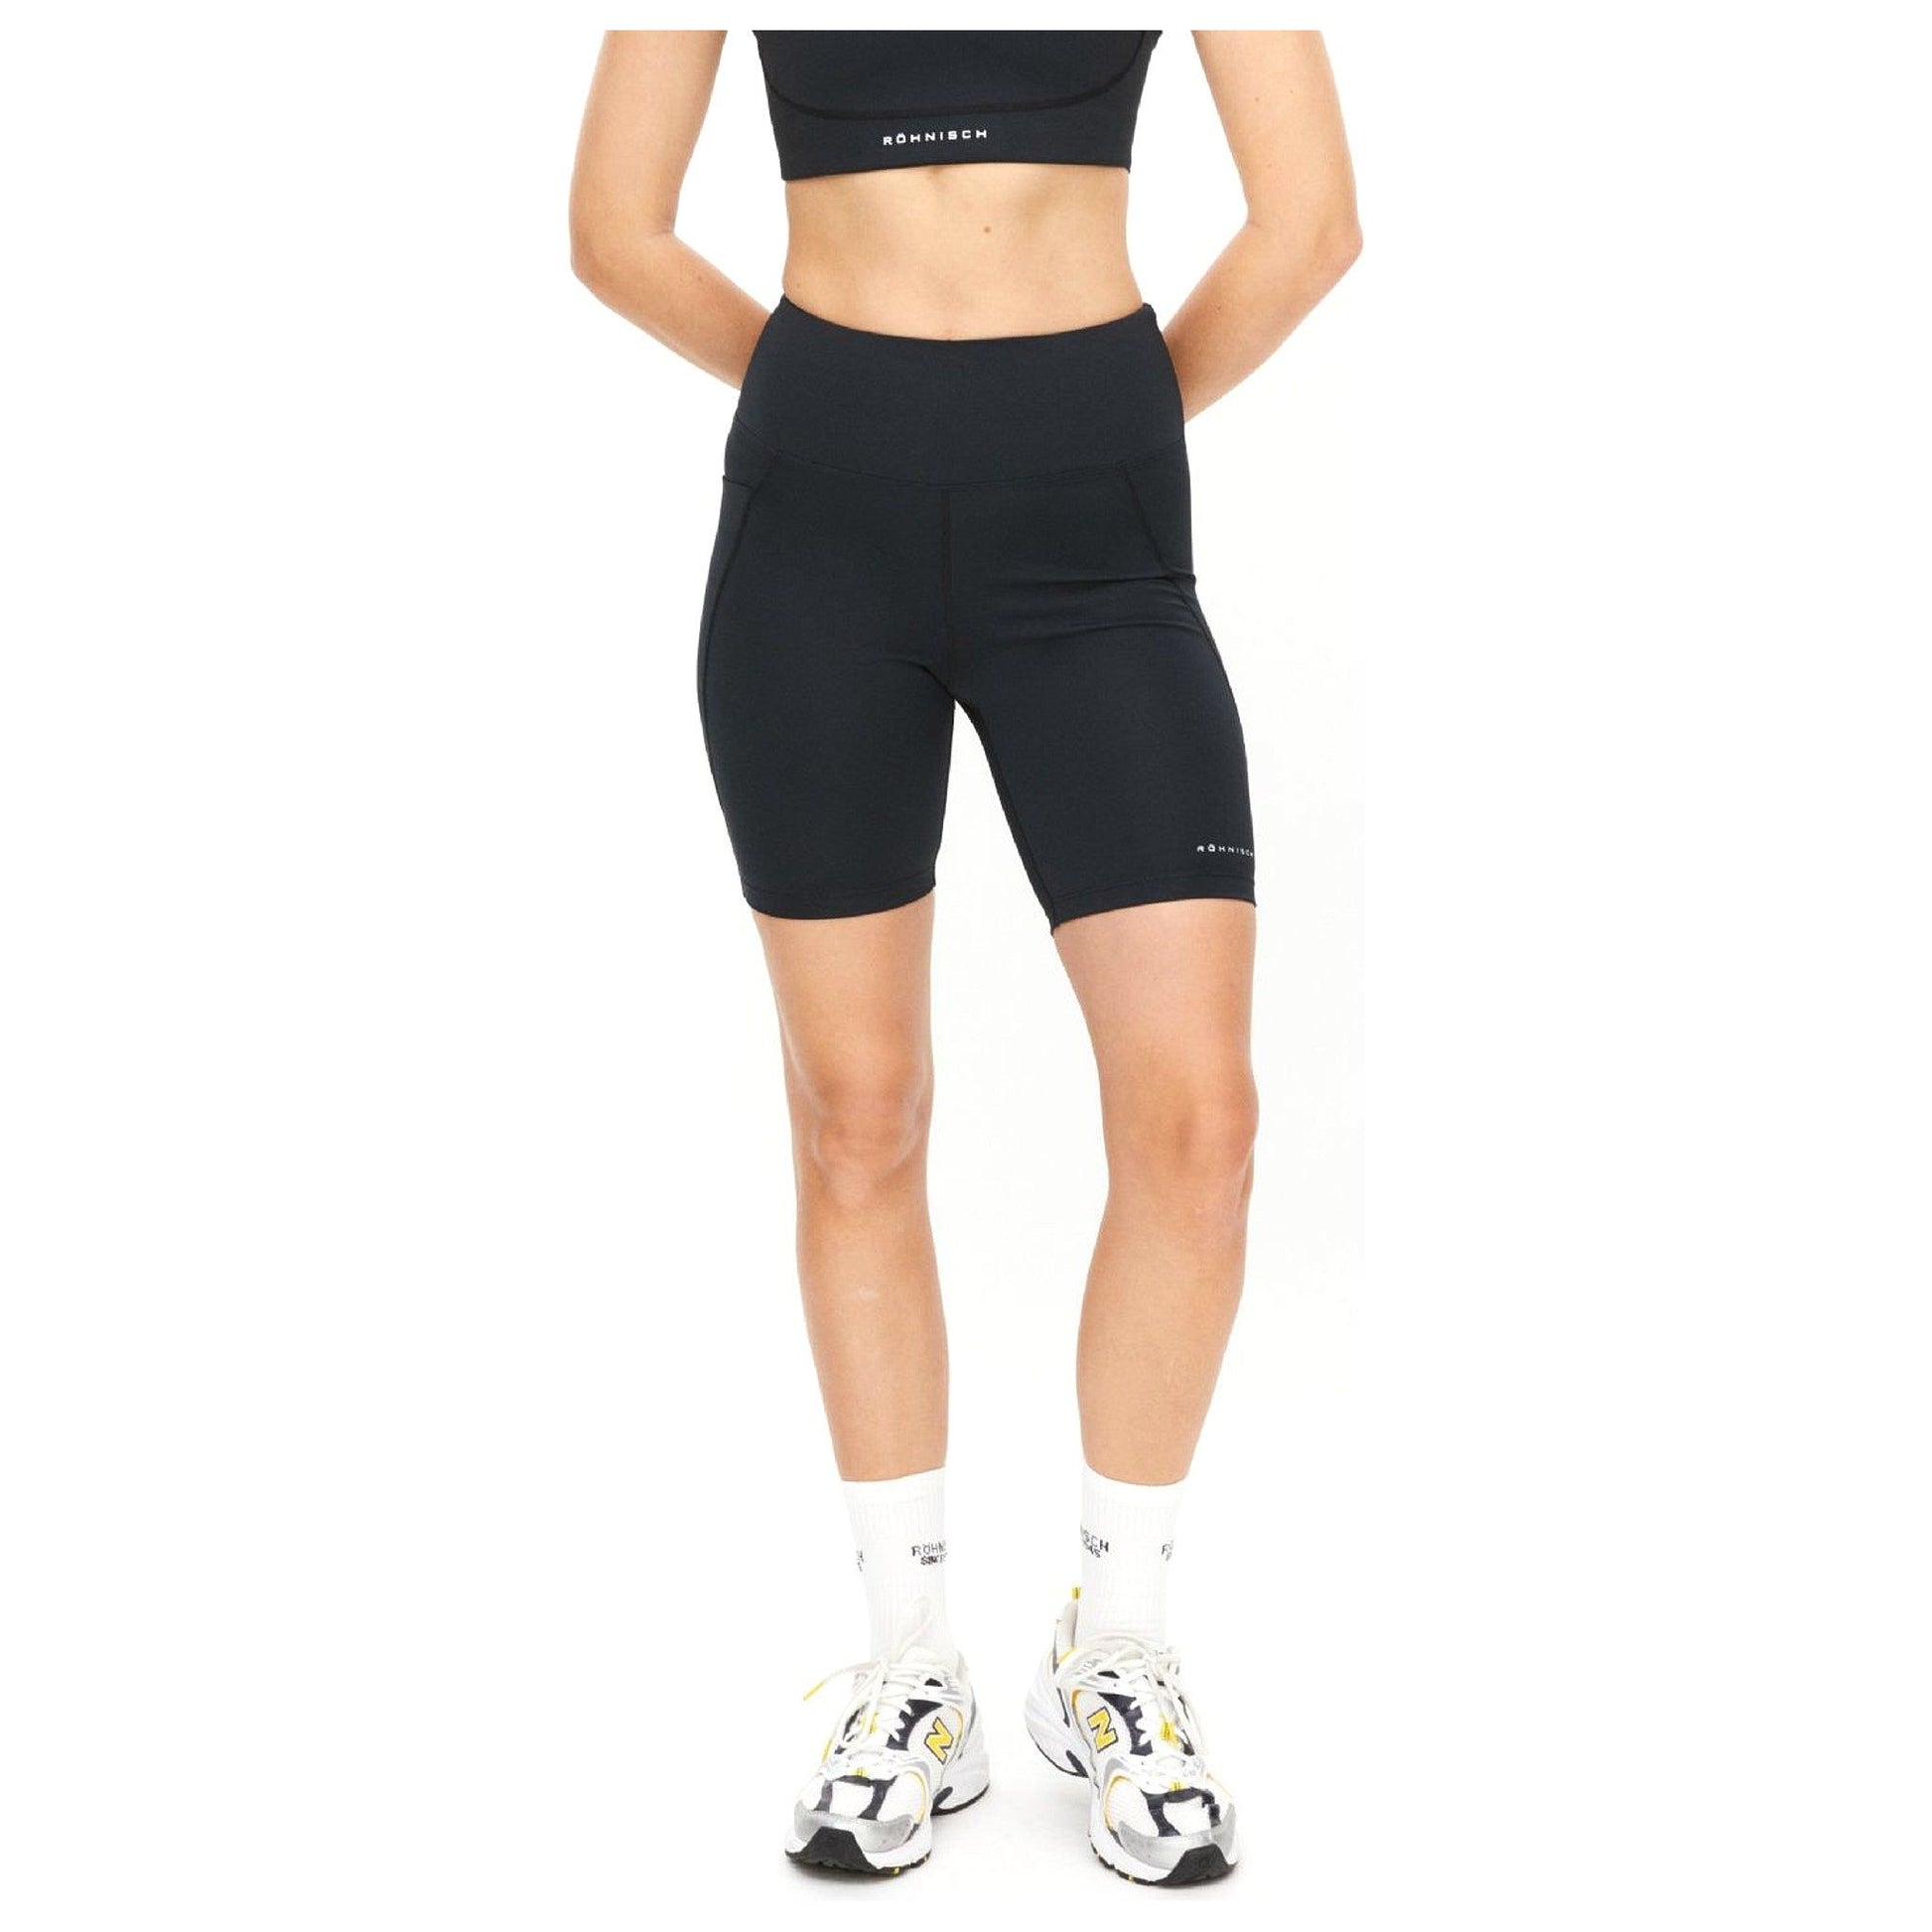 Rohnisch W Active Shorts Flattering High Waisted Bike Tights, Black